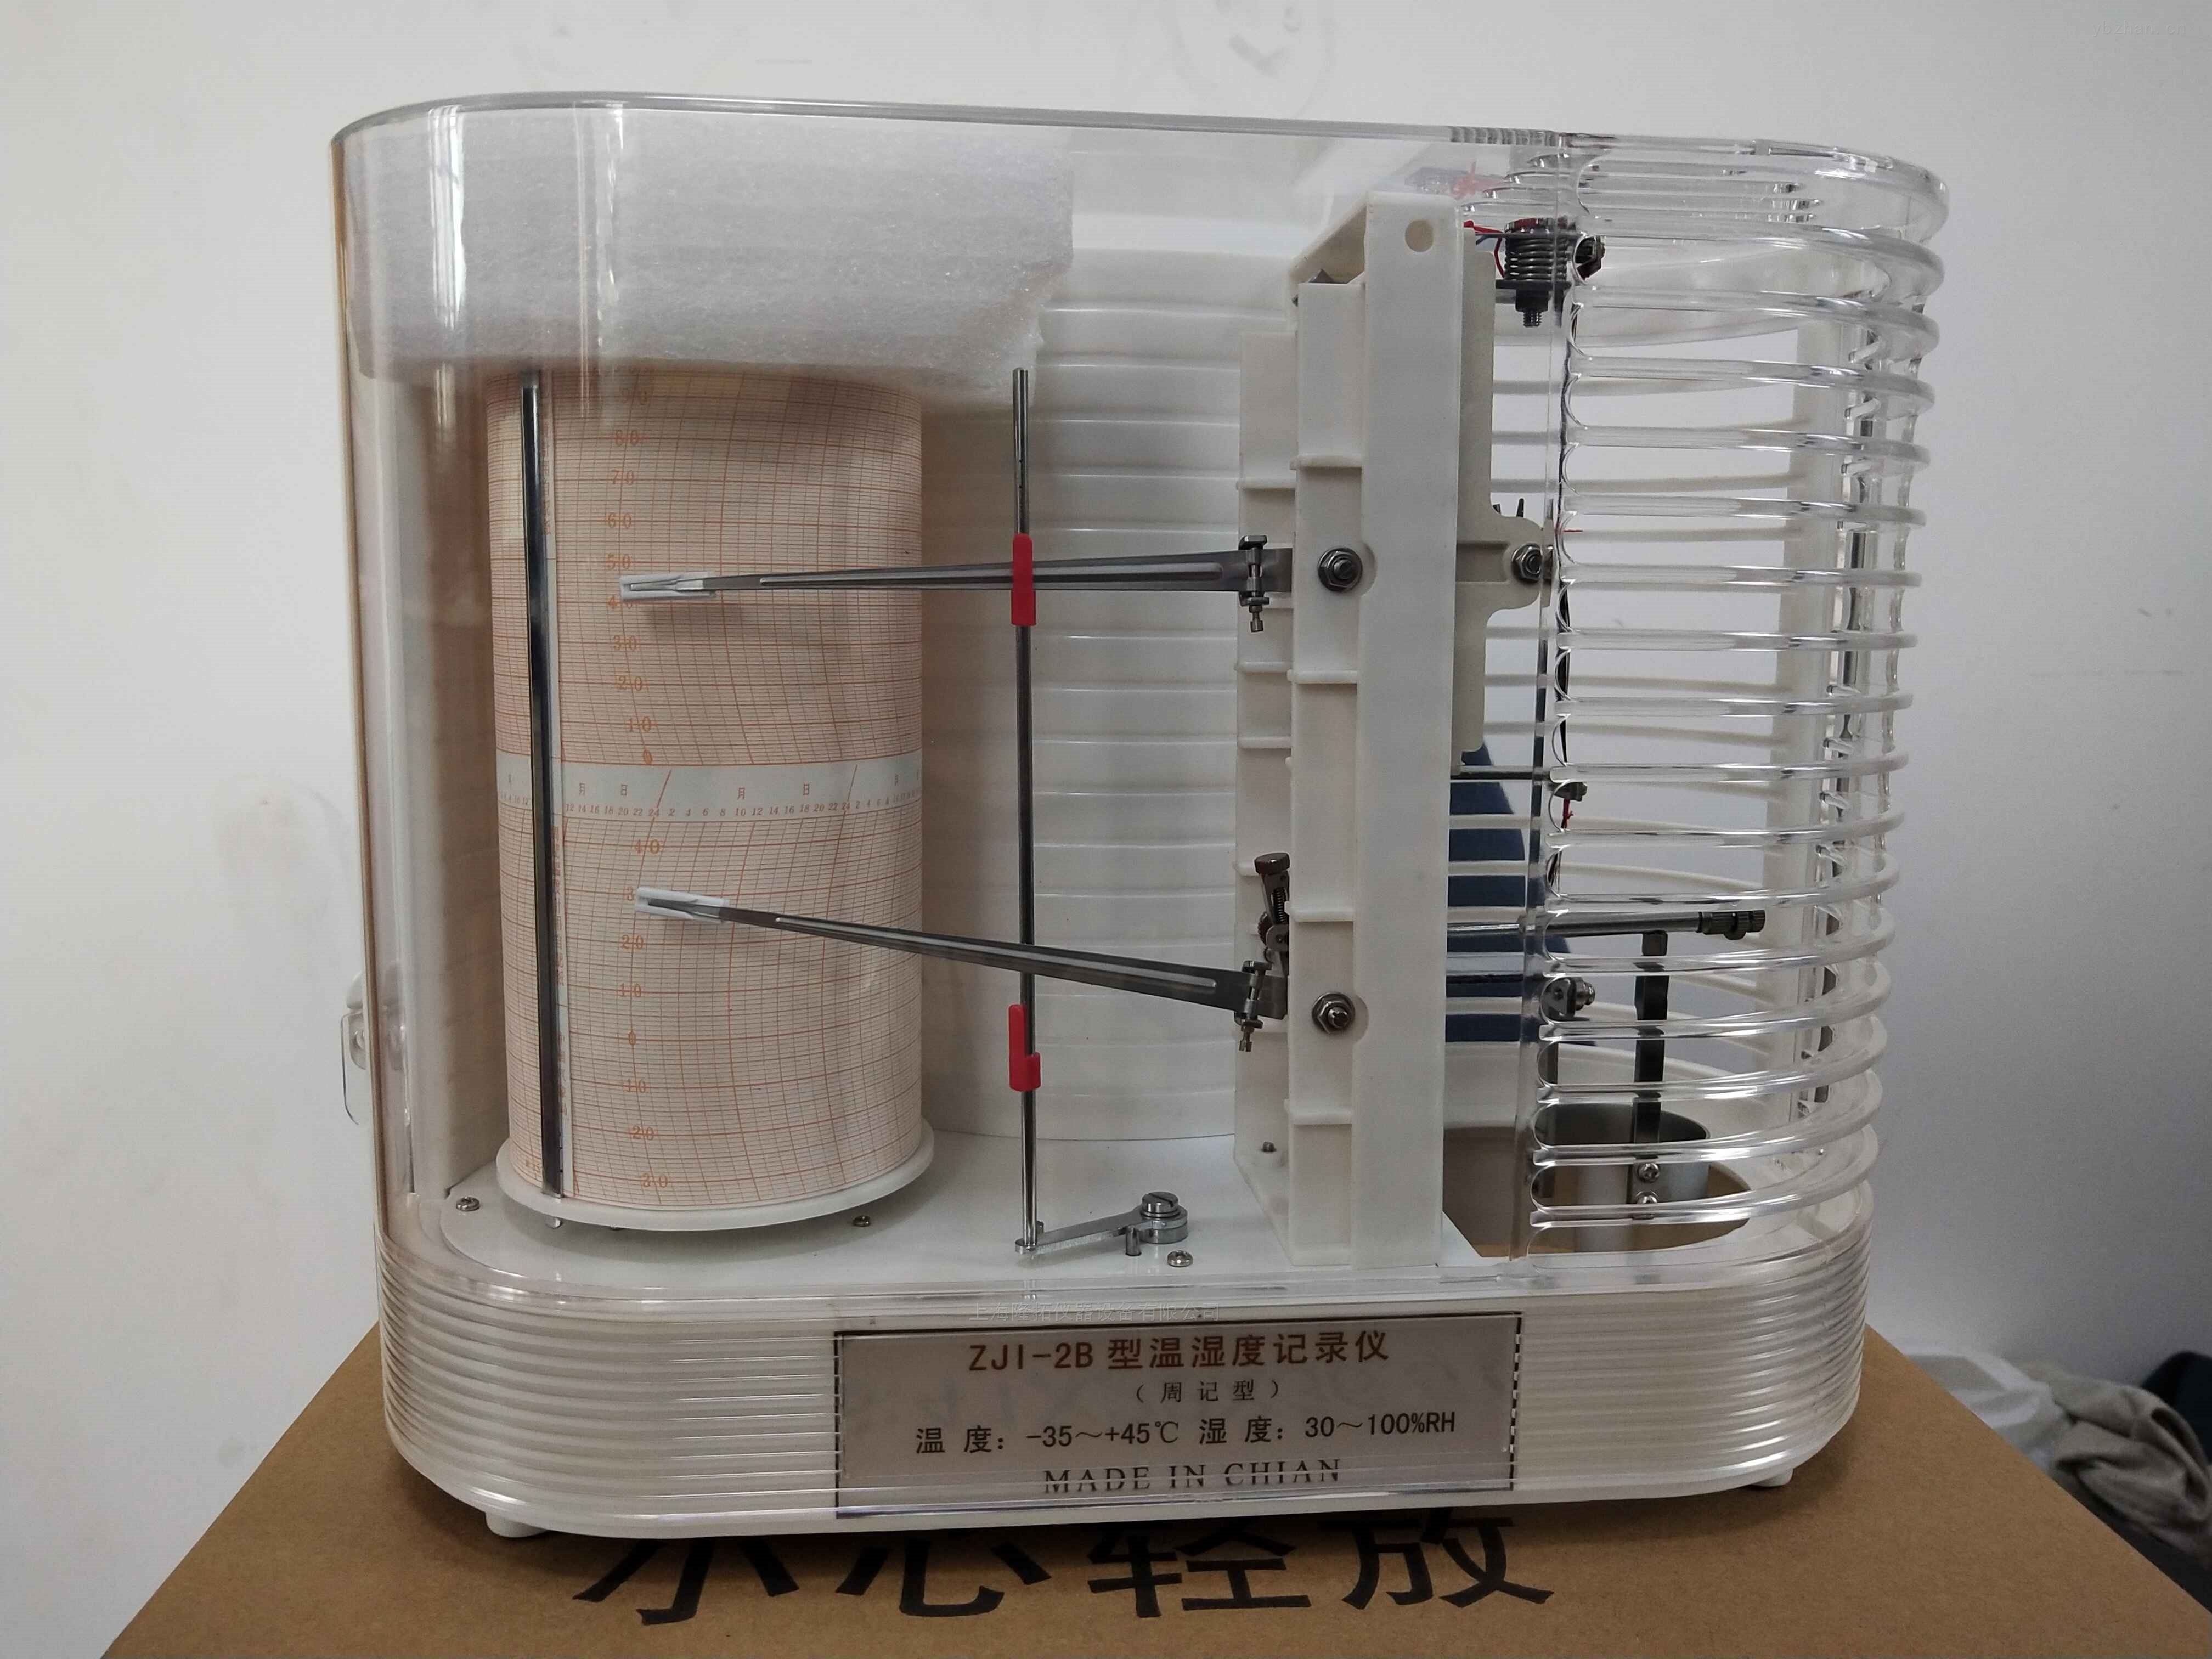 ZJ1-2B温湿度记录仪 ，毛发式温湿度计